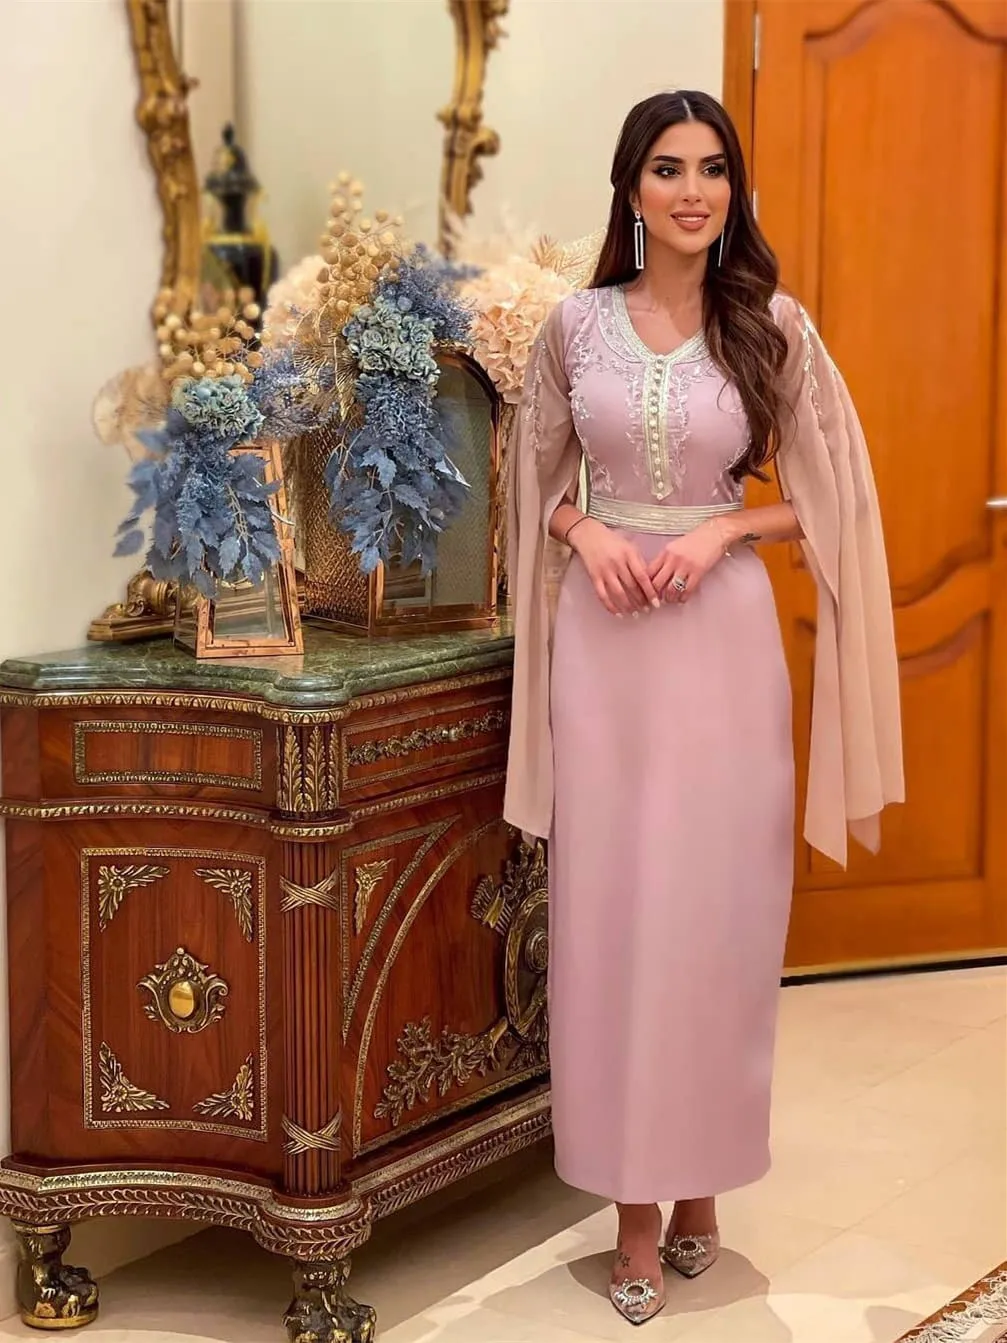 

Pink Moroccan Caftan Evening Dress With Applique A-Line Saudi Arabia Dubai Summer Dress V-Neck Prom Dresses Plus Size